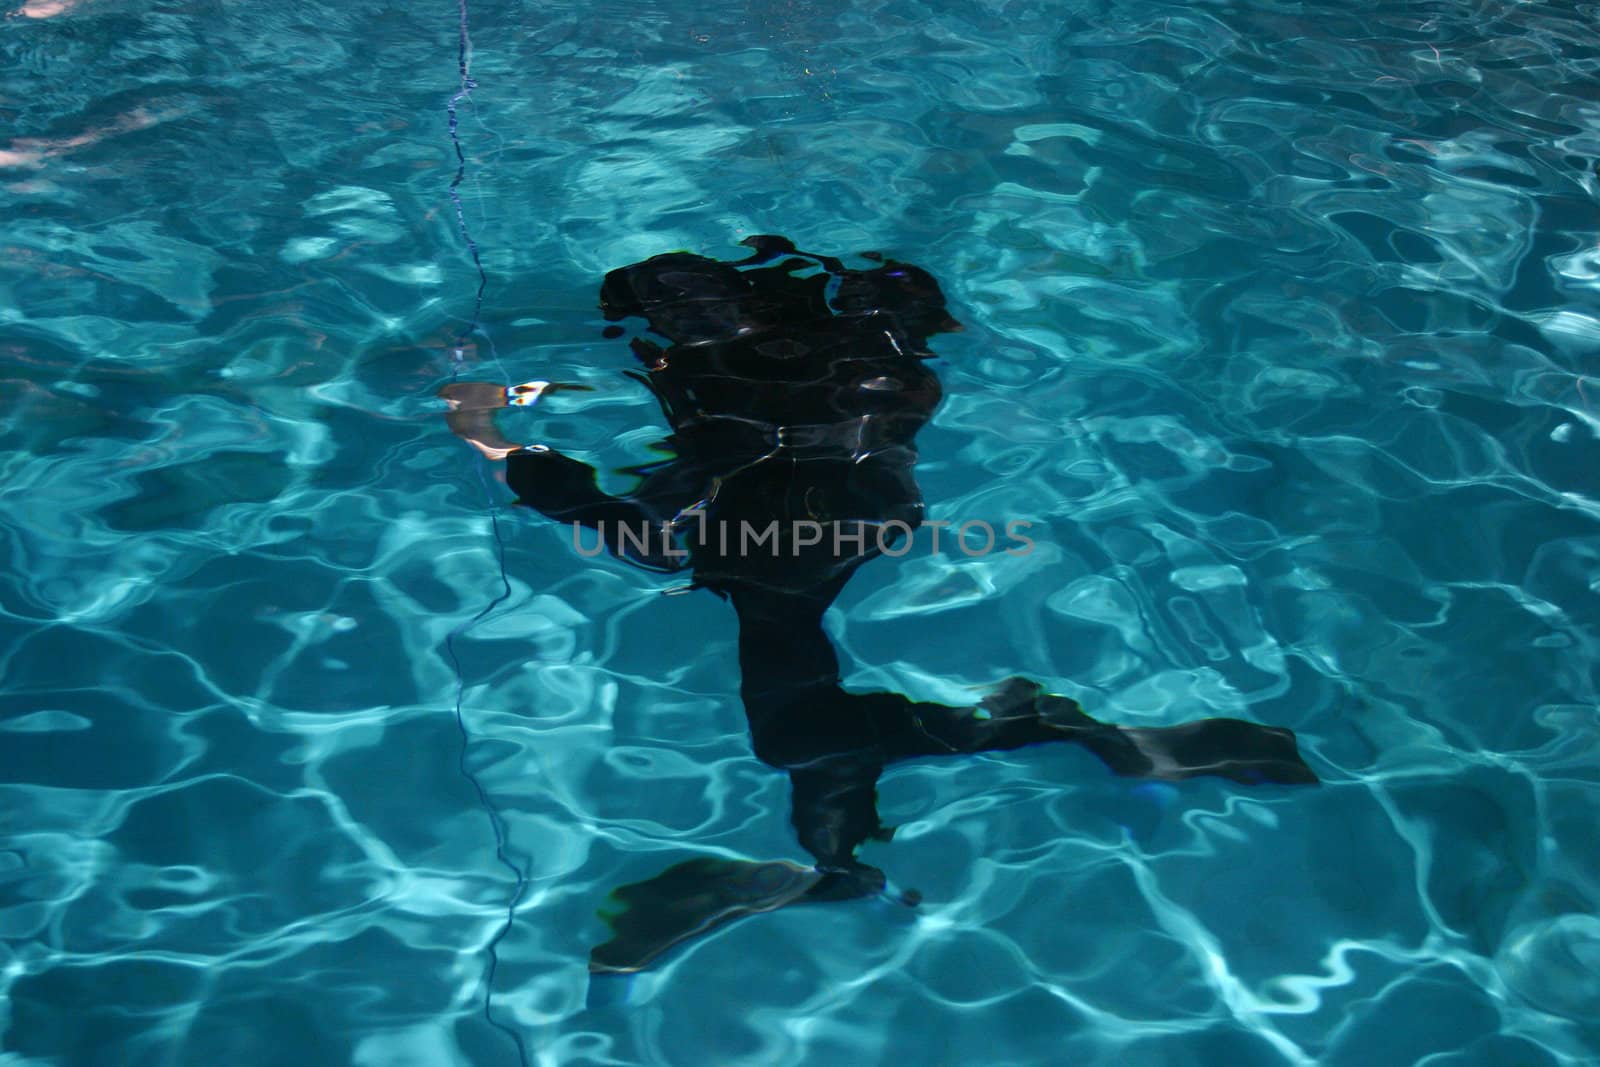 Diver moving underwater by fotorobs